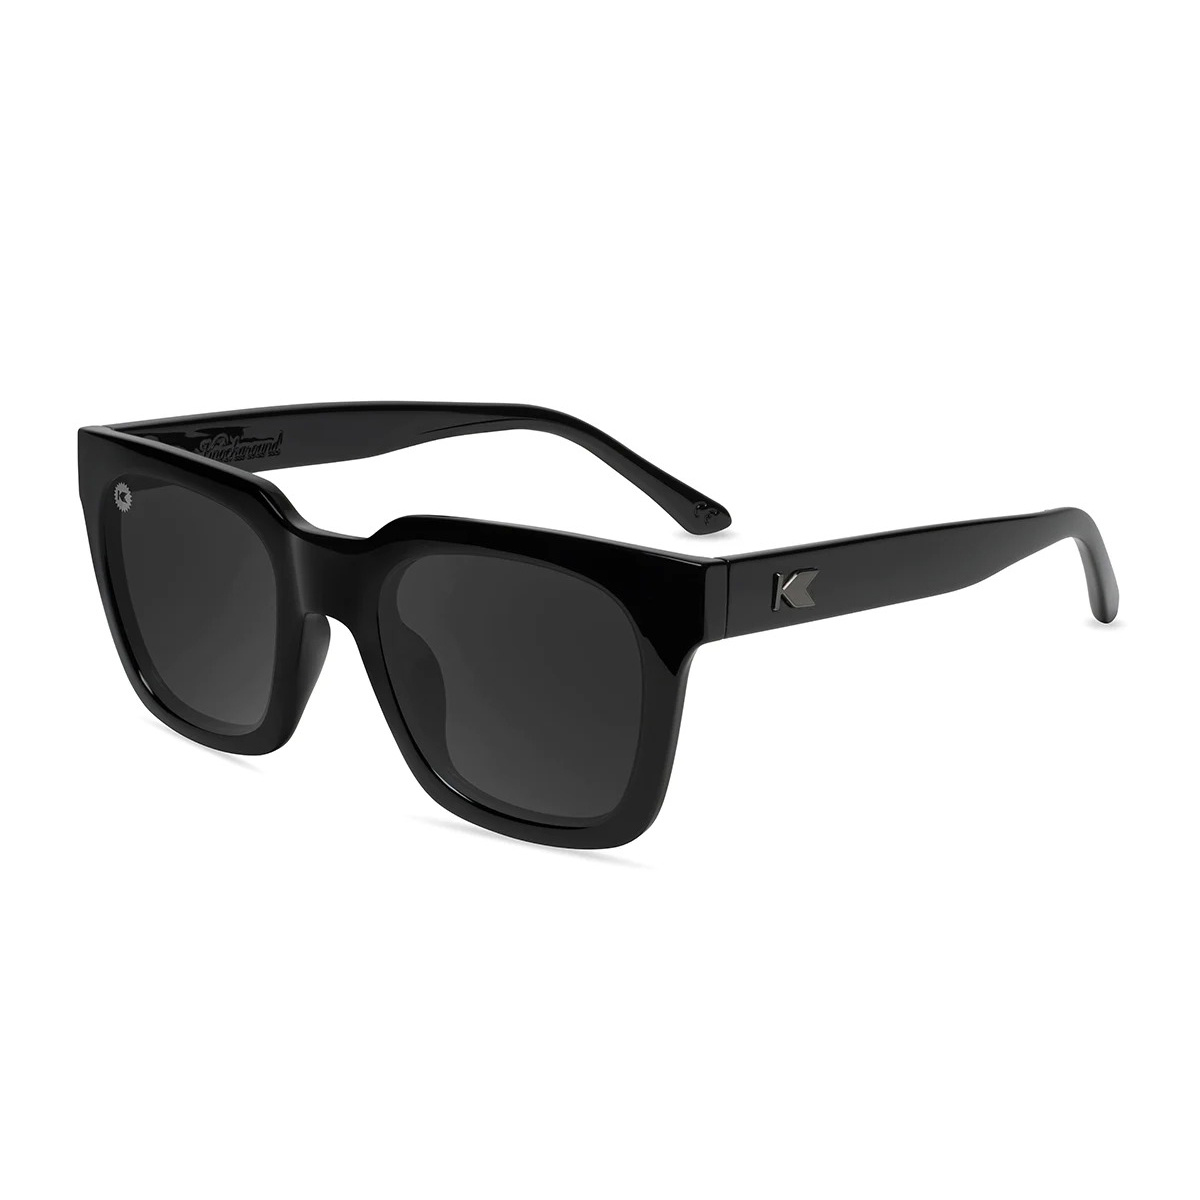  Knockaround Brightsides Polarized Sunglasses for Women & Men -  Impact Resistant Lenses & Full UV400 Protection, Black on Black : Clothing,  Shoes & Jewelry